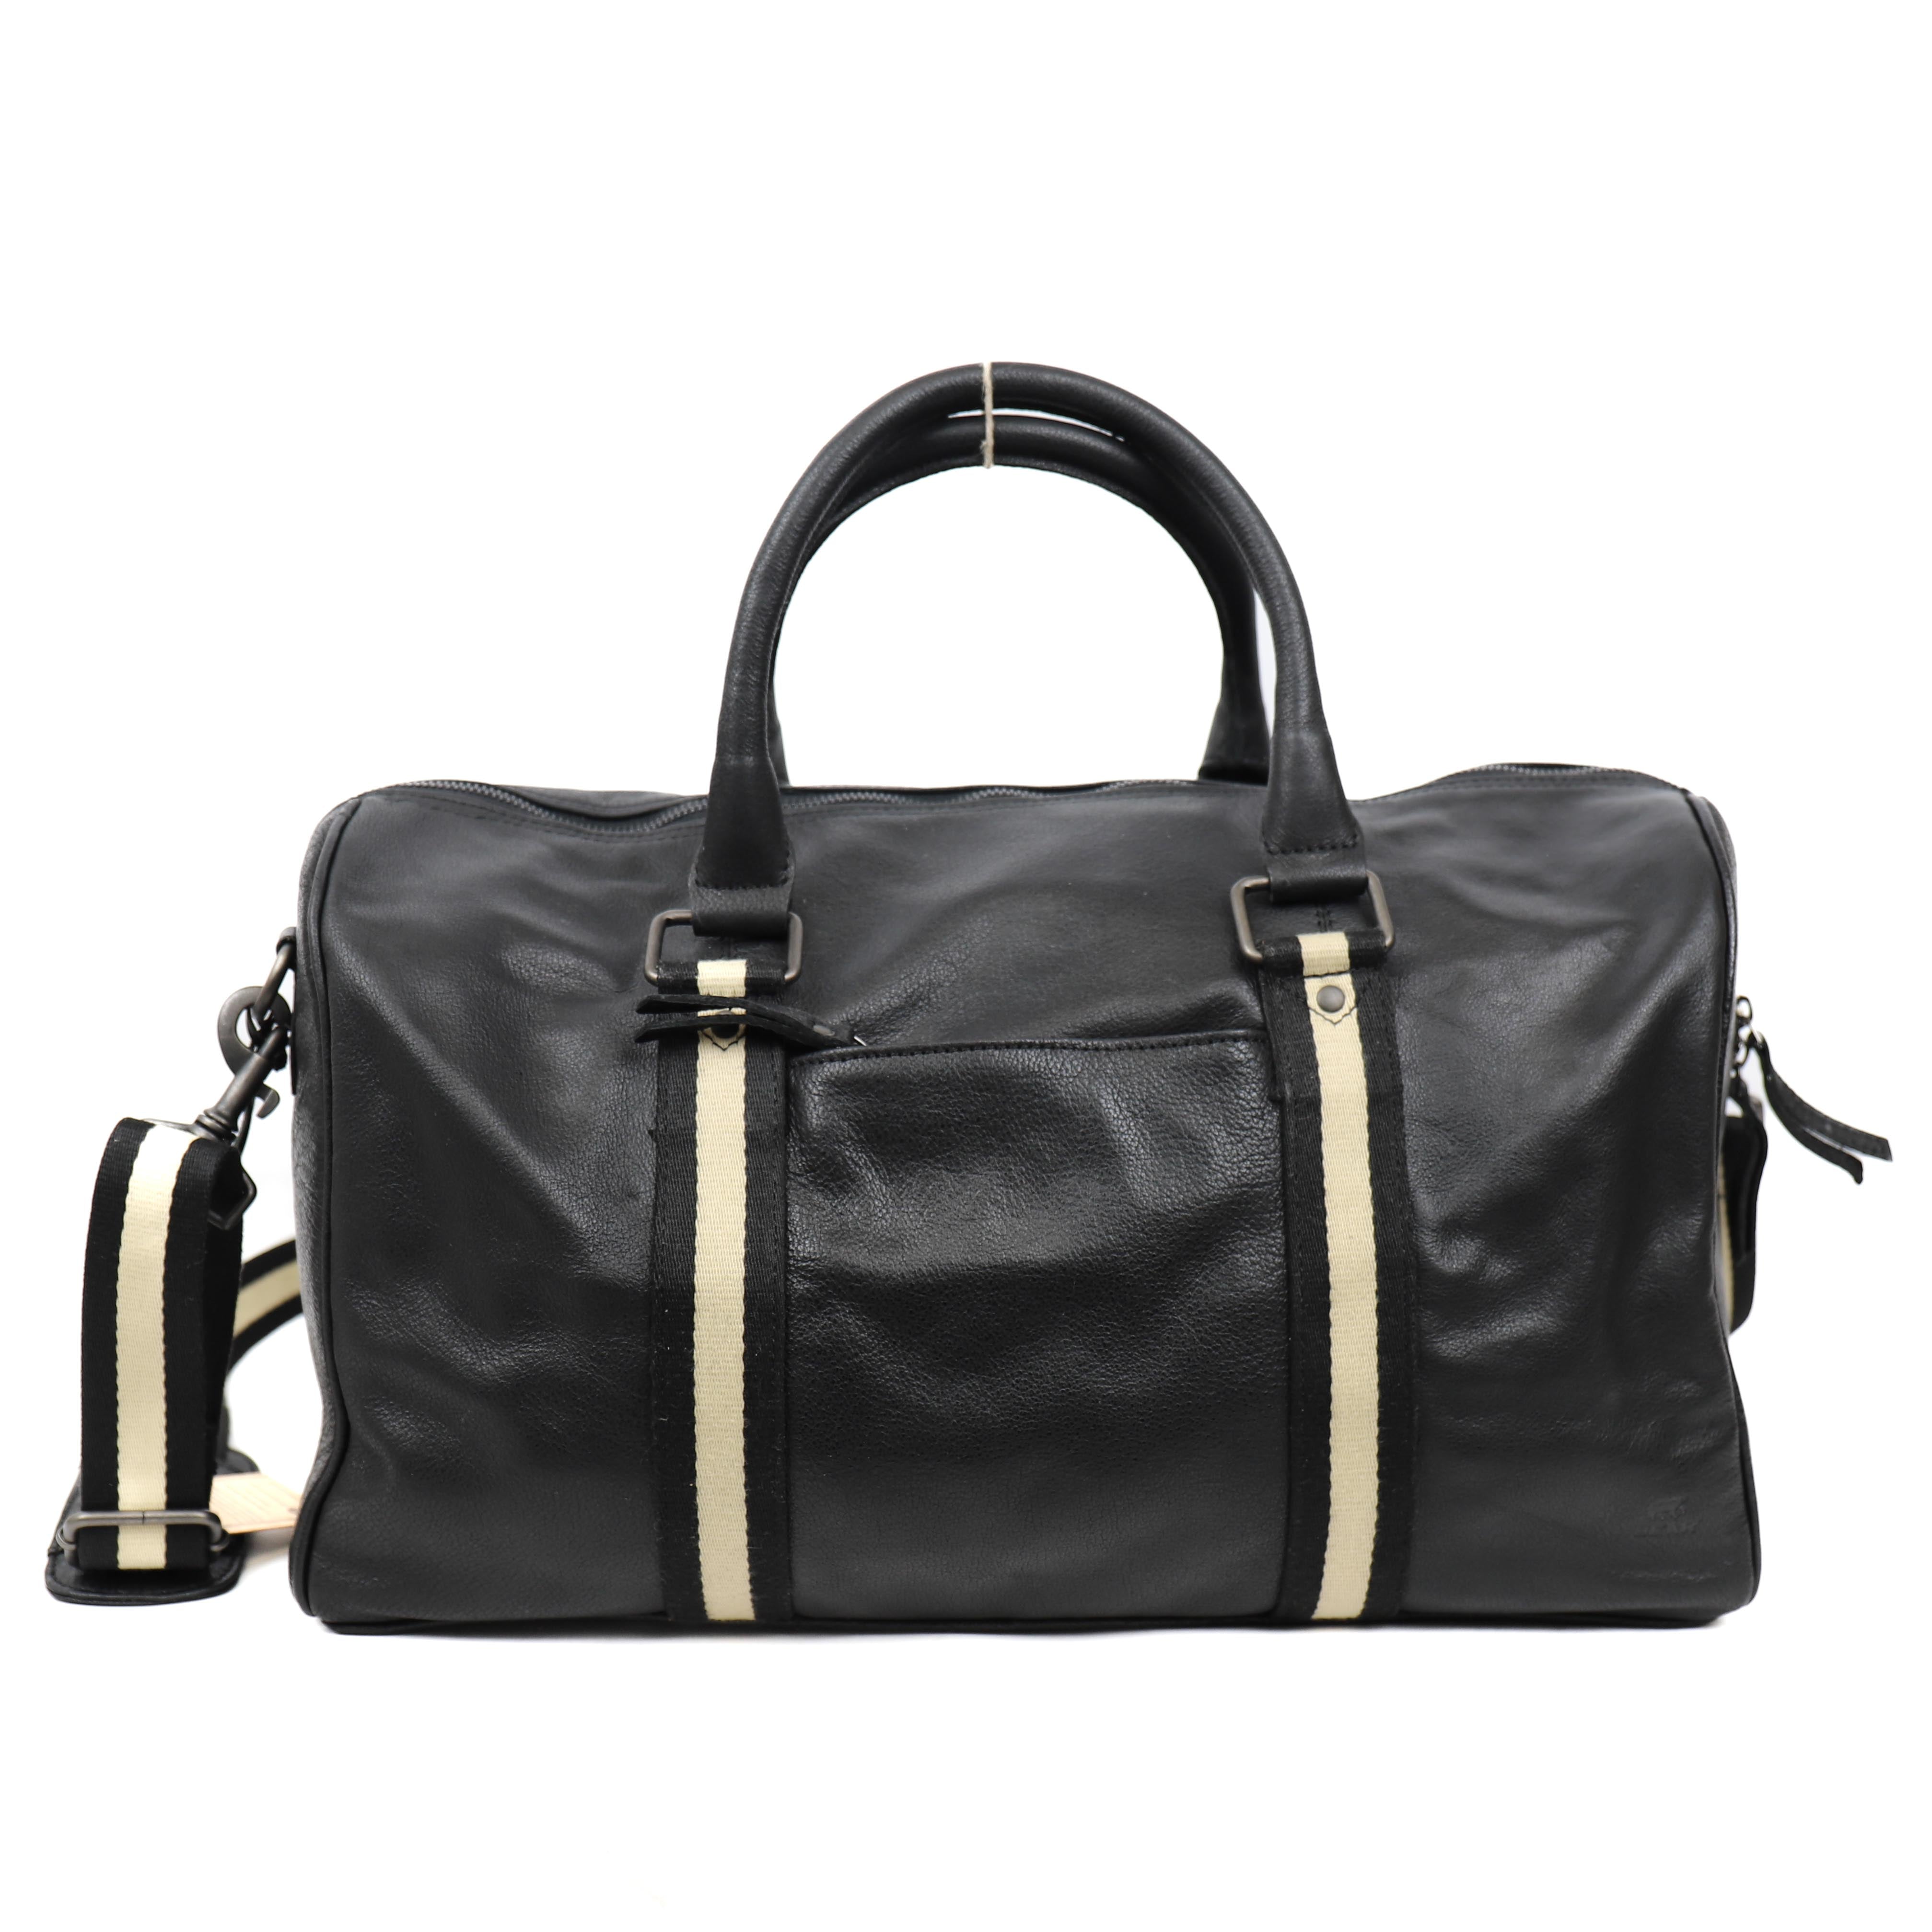 Weekend bag 'Jelmer' black/stripe